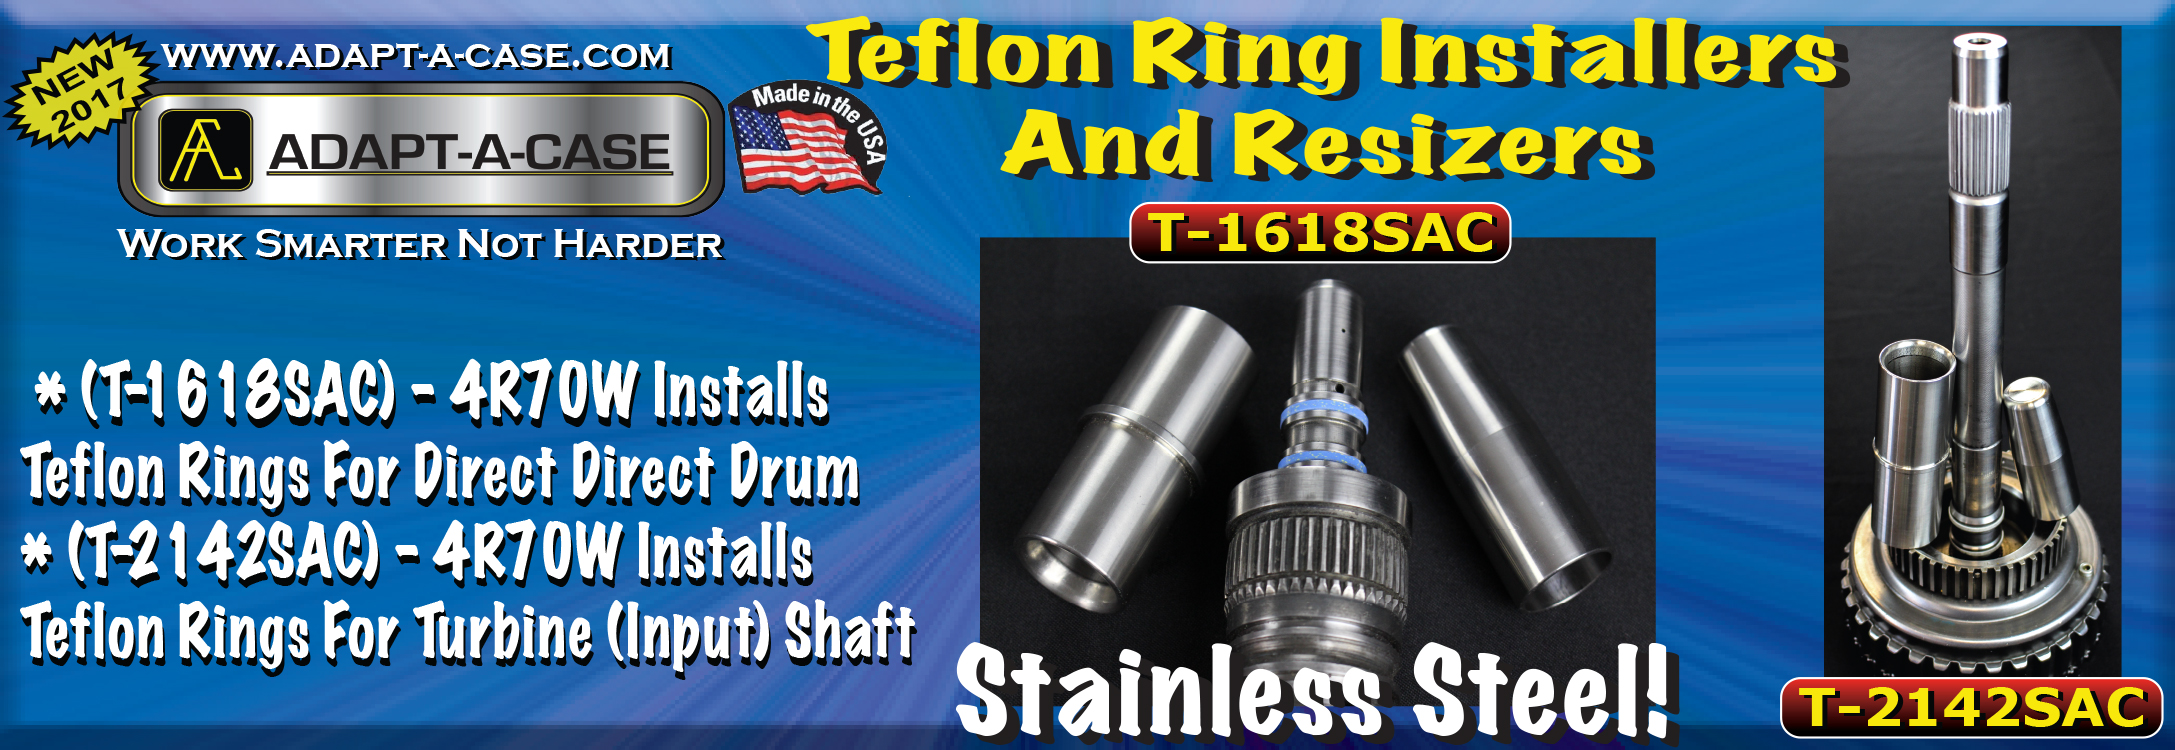 Stainless Steel Teflon Rin Installers for 4R70W